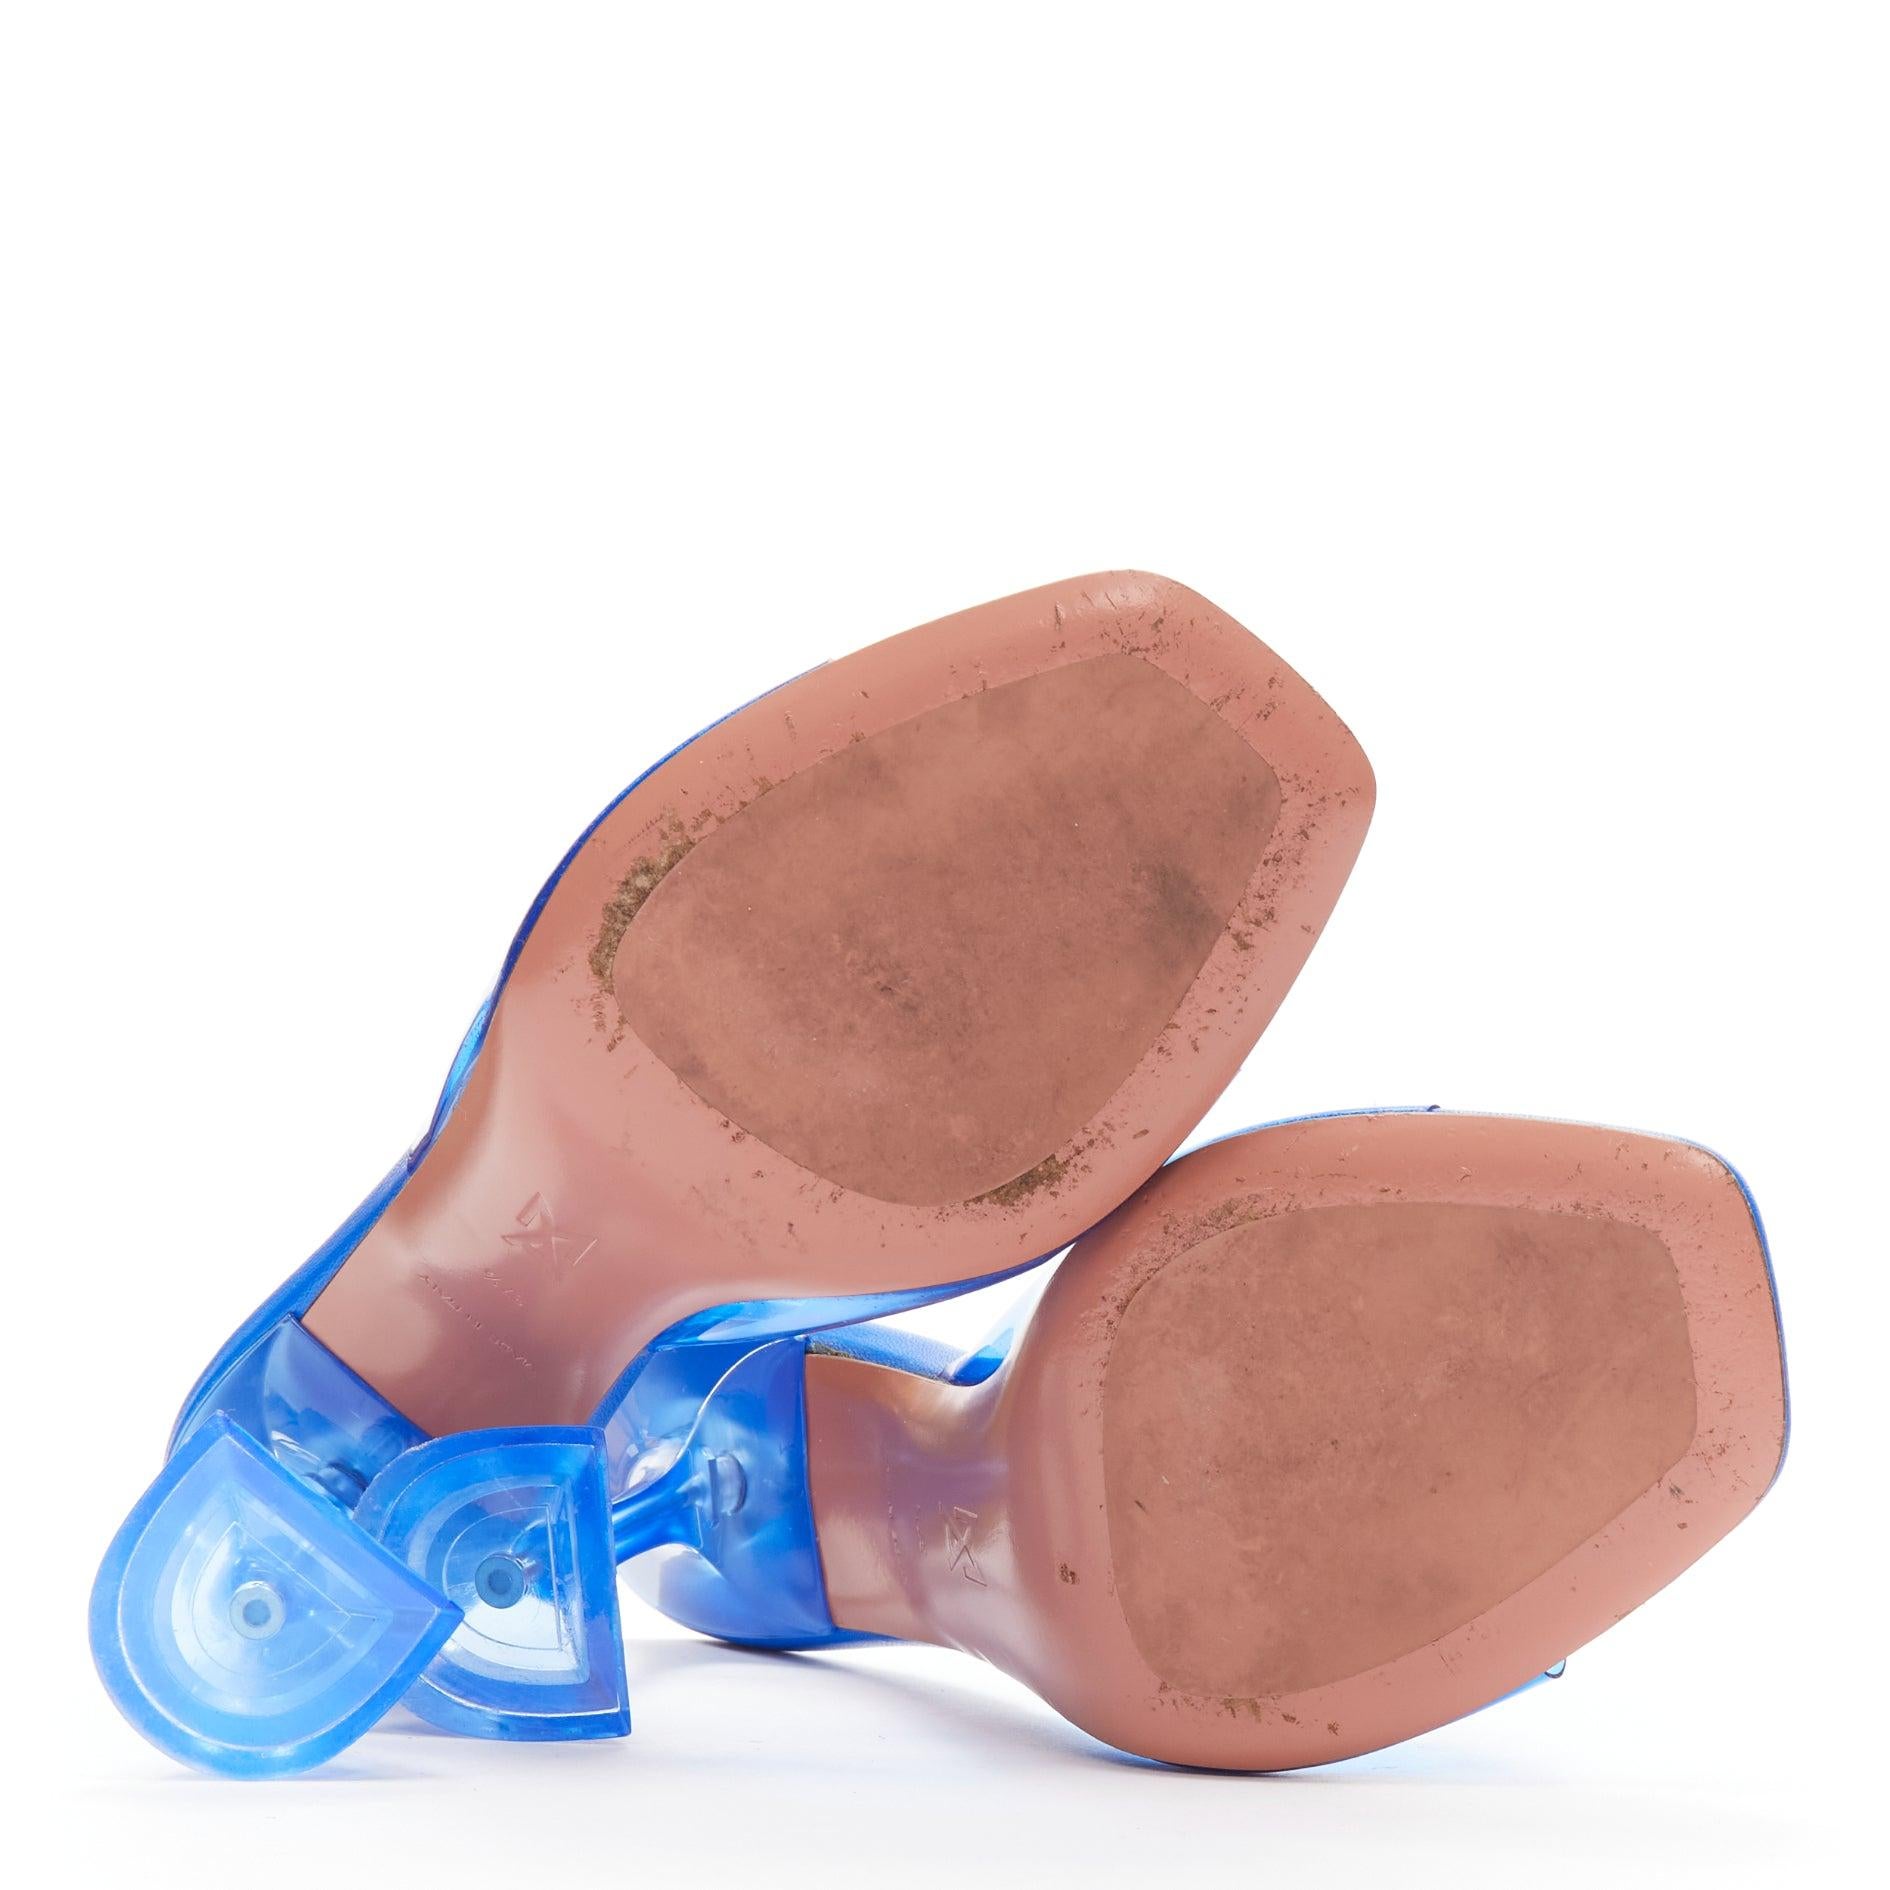 AMINA MUADDI Lupita blue clear PVC spool lucite heel sandal EU37.5 For Sale 6